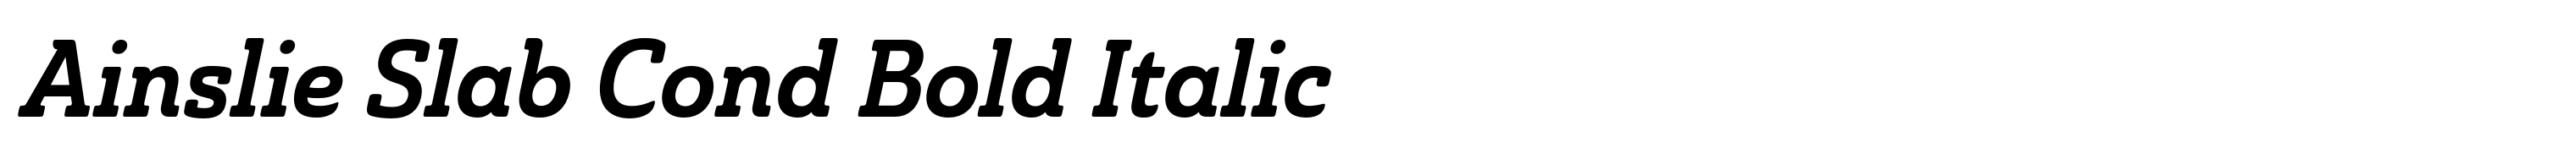 Ainslie Slab Cond Bold Italic